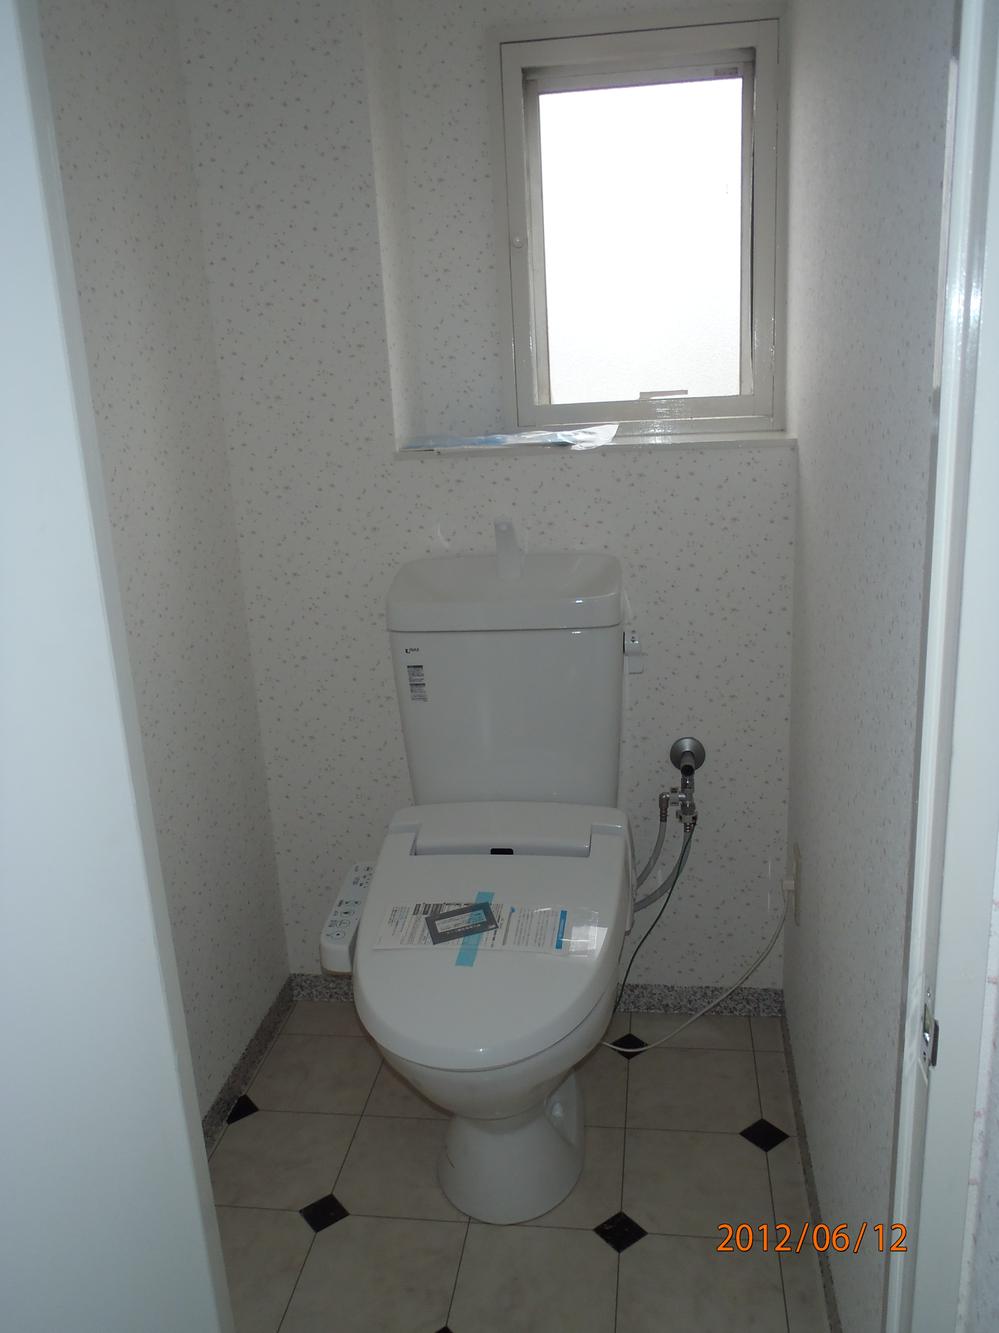 Toilet. (After renovation) same specification